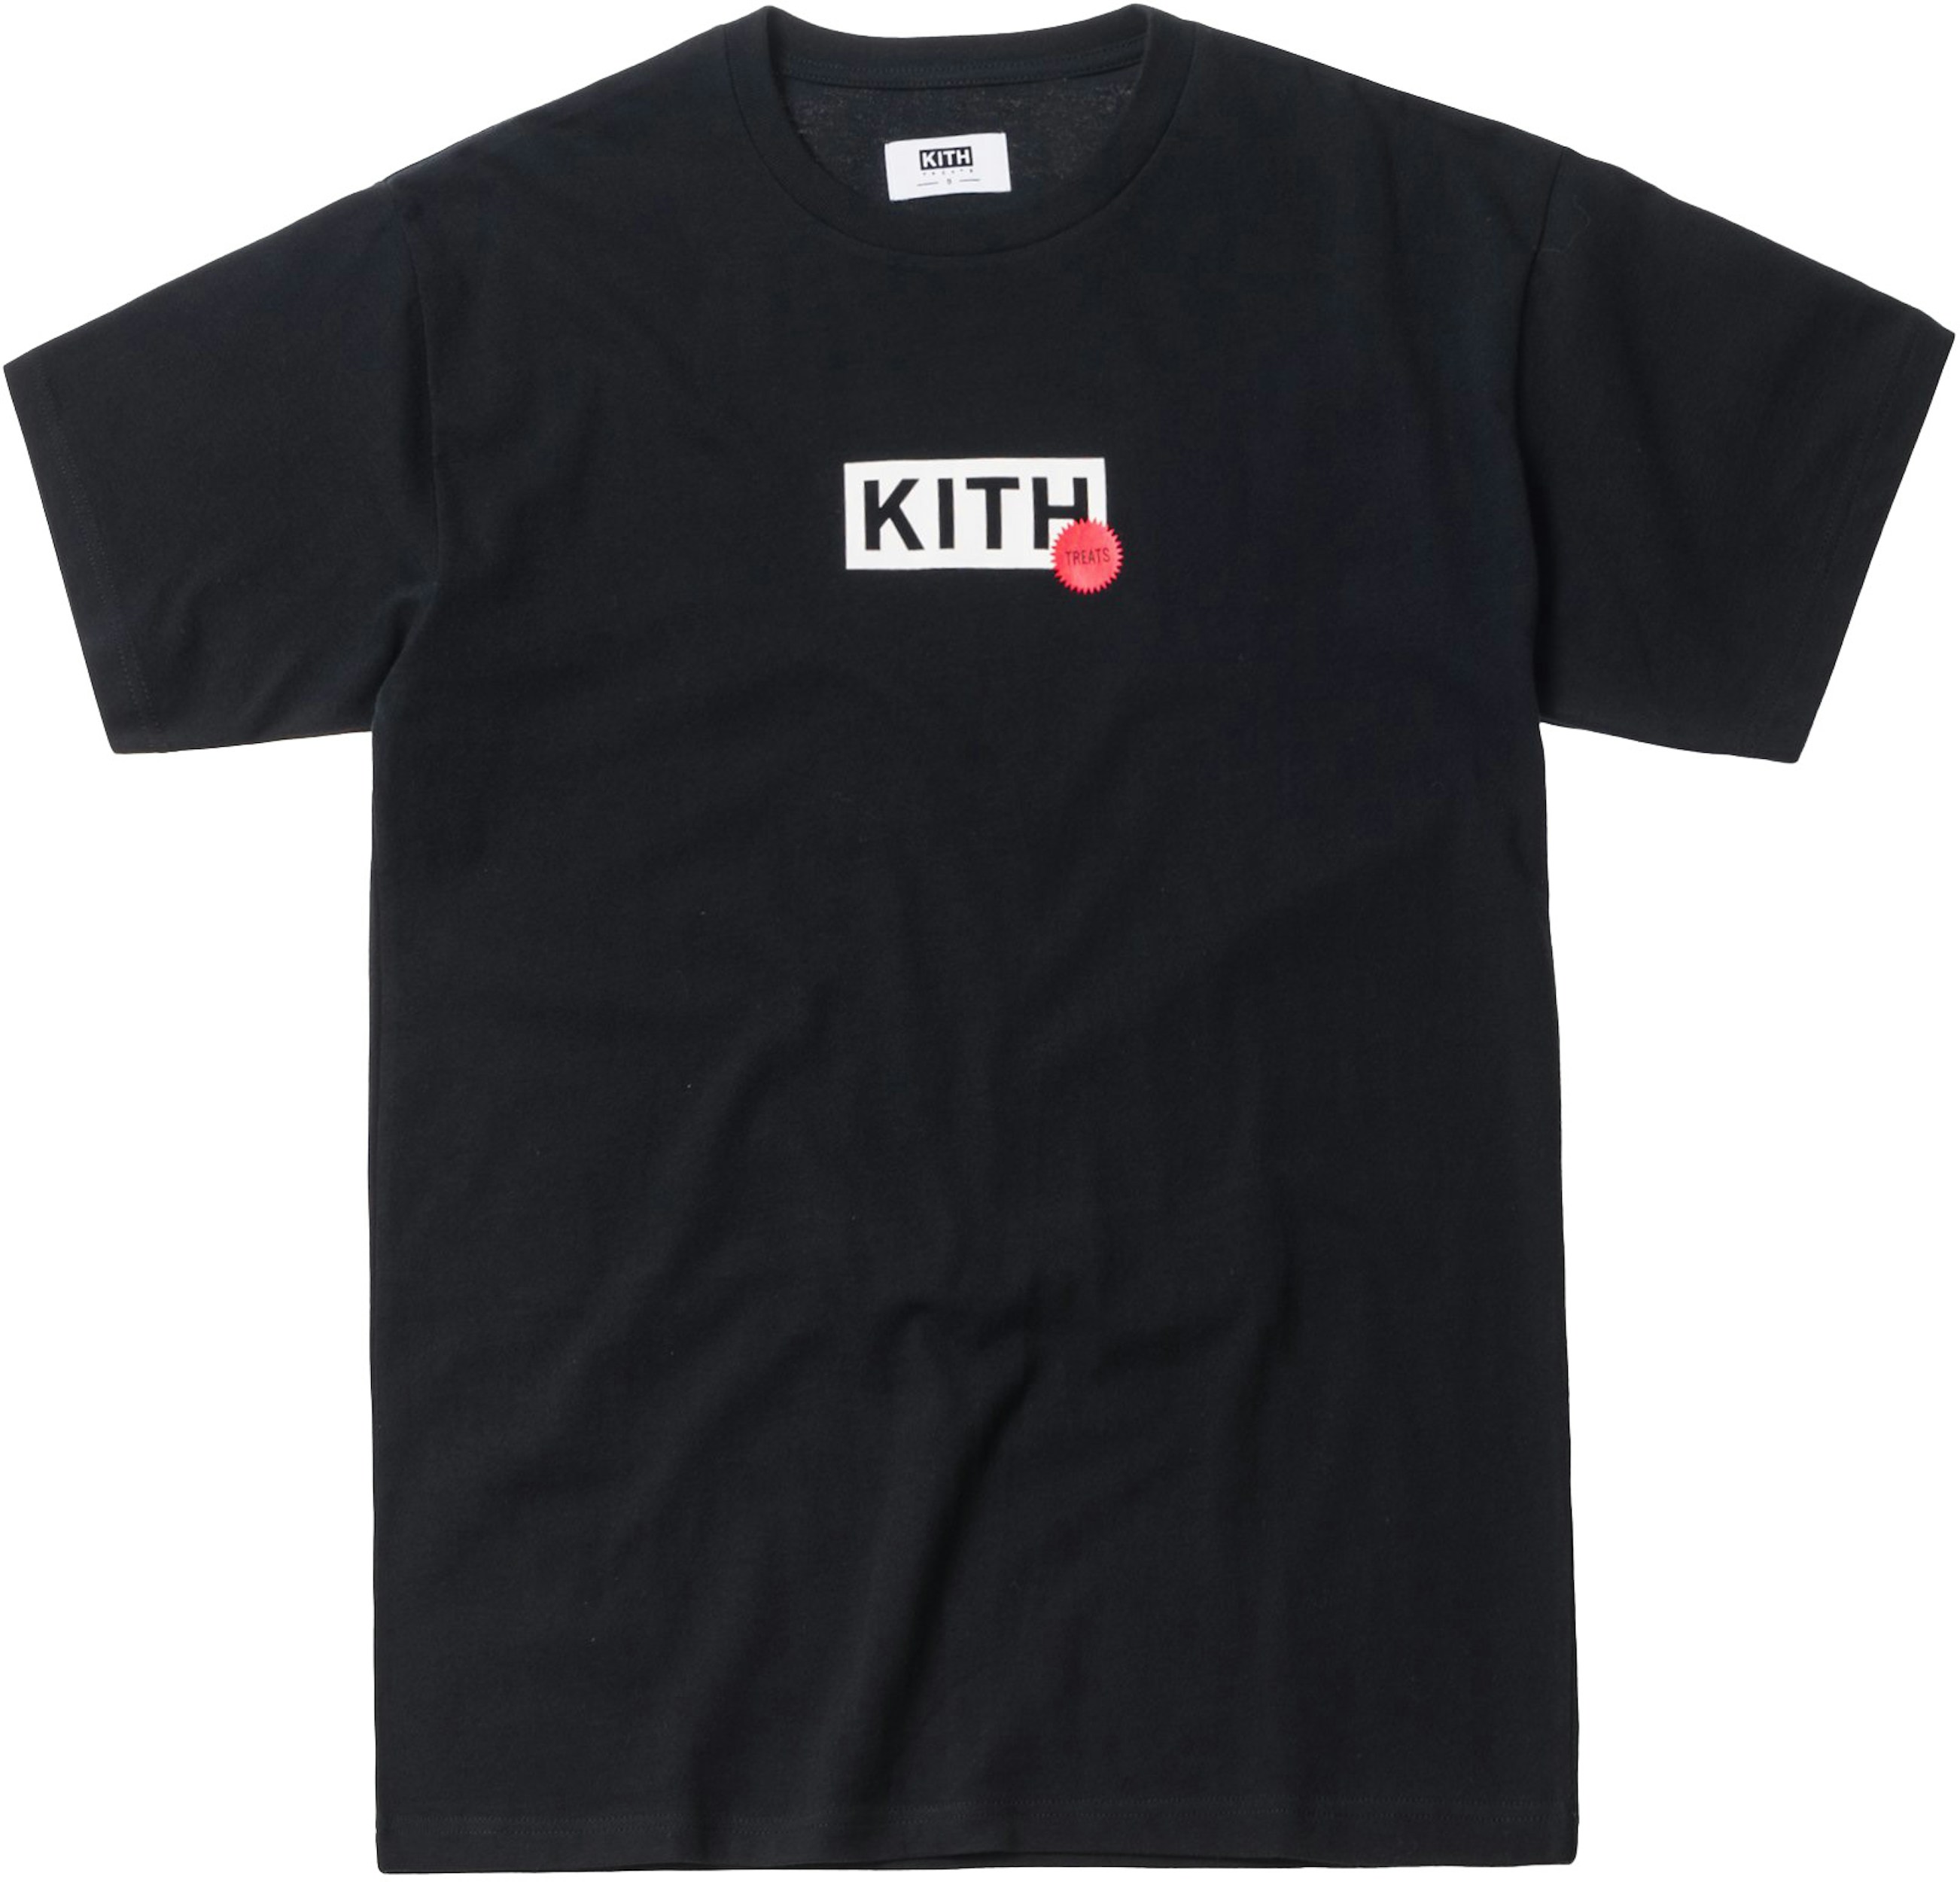 Kith Treats Proof Sticker Tee Black - FW18